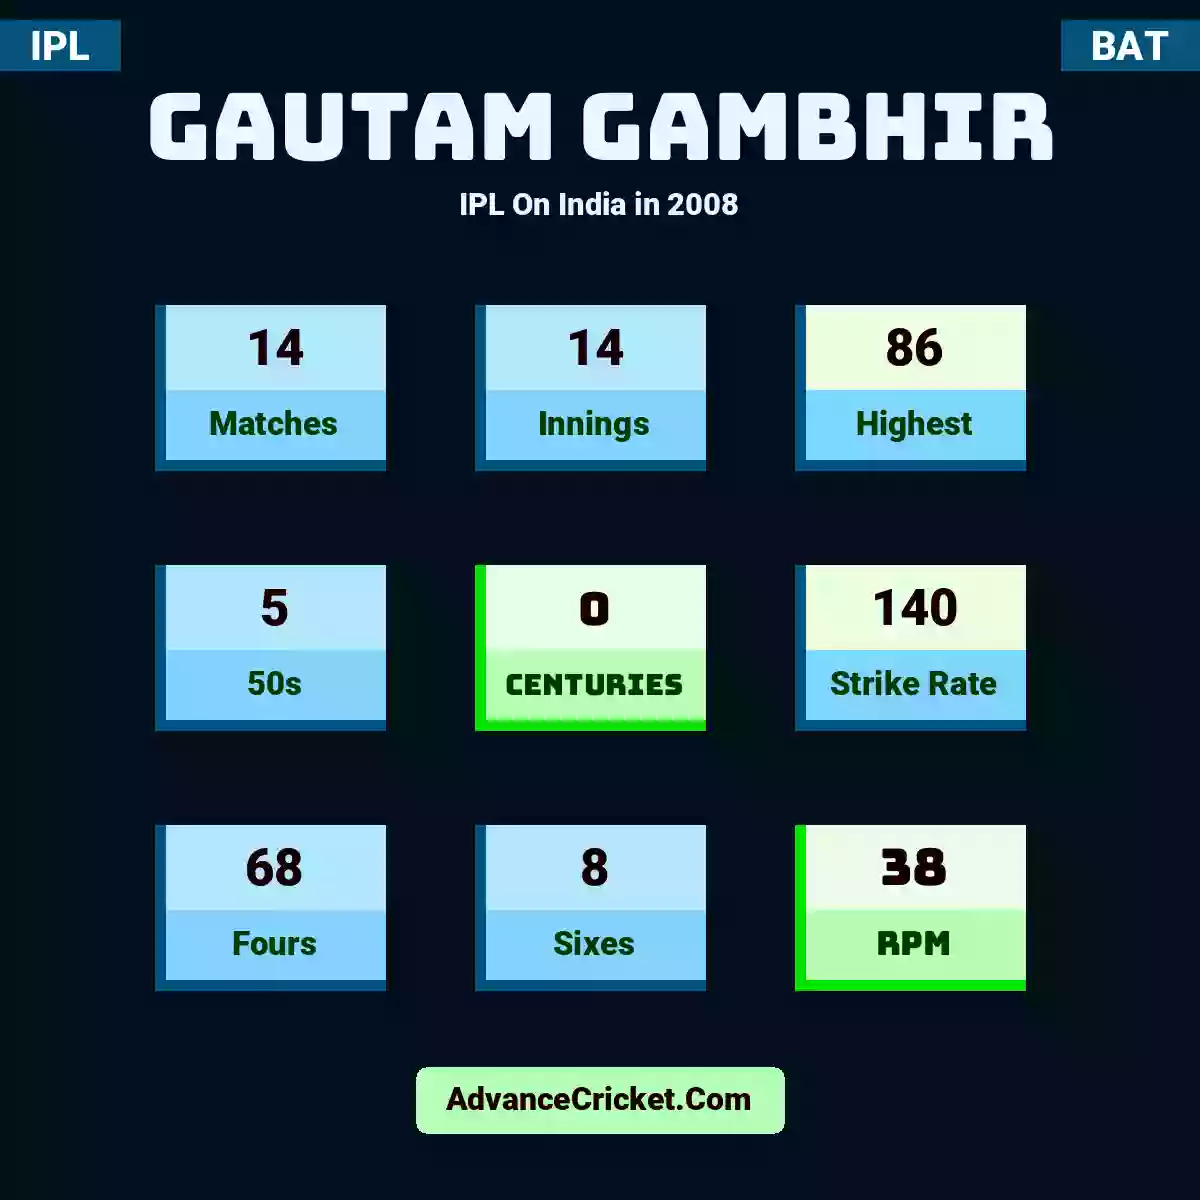 Gautam Gambhir IPL  On India in 2008, Gautam Gambhir played 14 matches, scored 86 runs as highest, 5 half-centuries, and 0 centuries, with a strike rate of 140. G.Gambhir hit 68 fours and 8 sixes, with an RPM of 38.